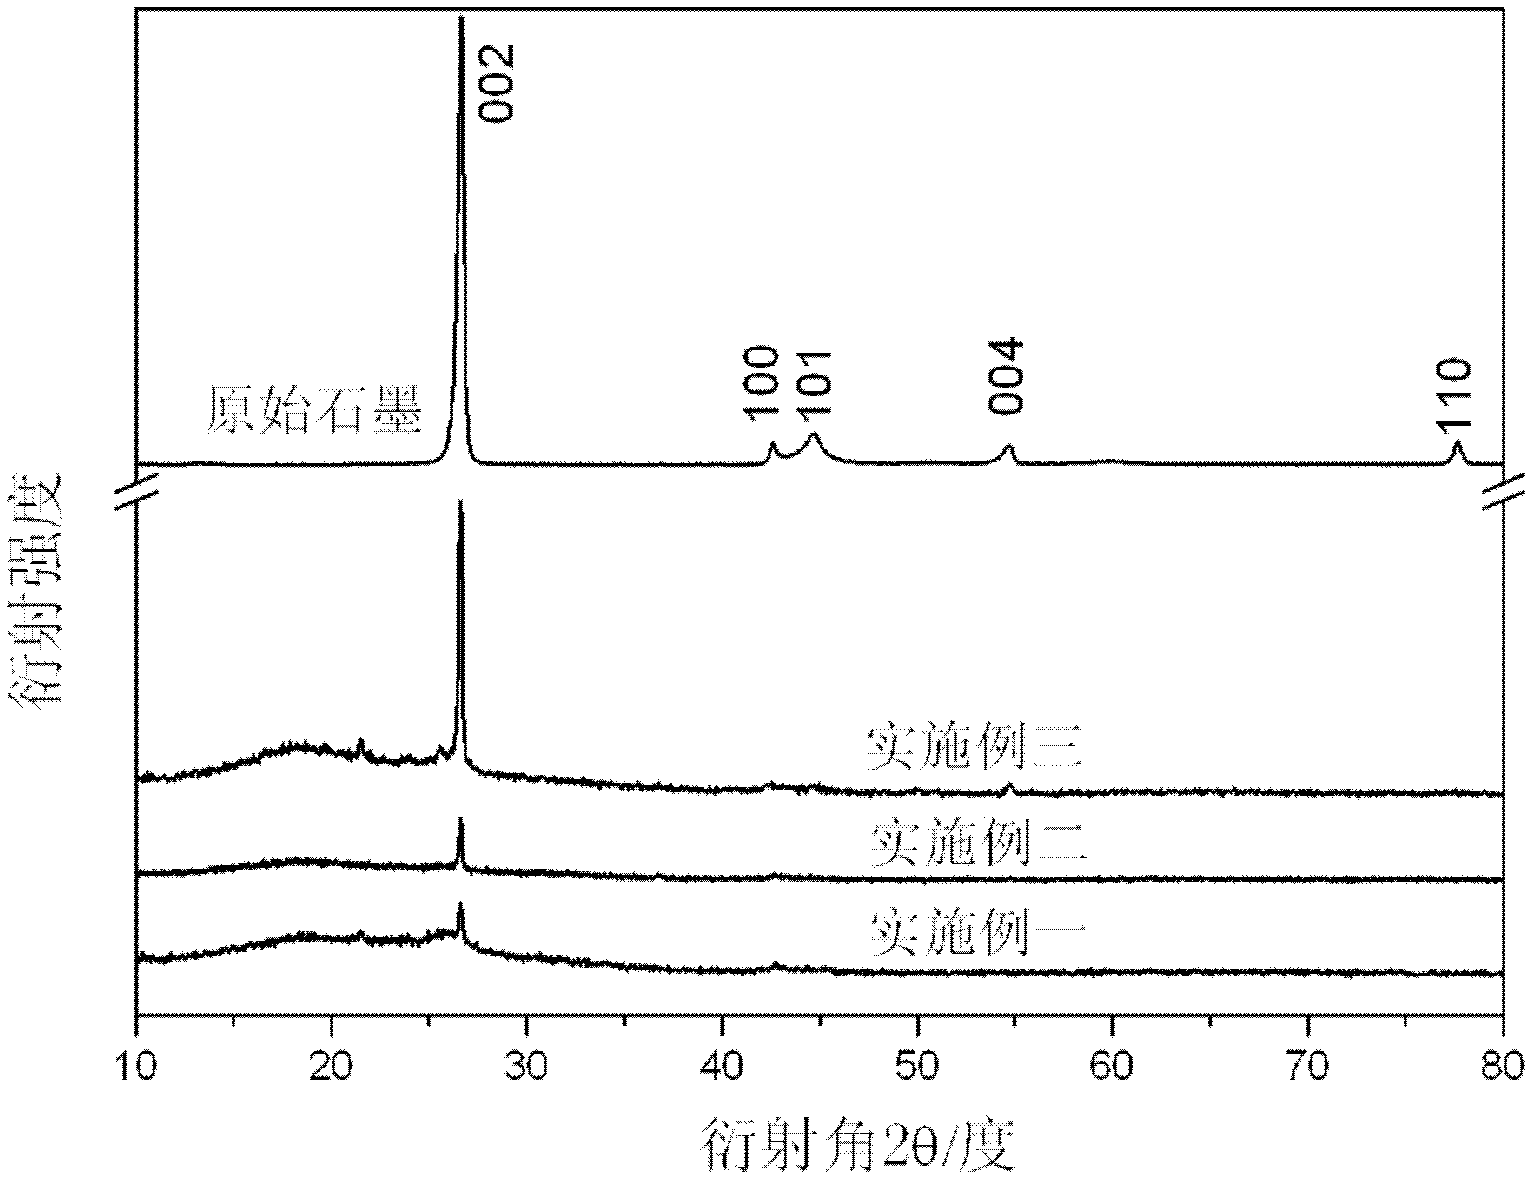 Preparation method for grapheme hydrogen storage electrode